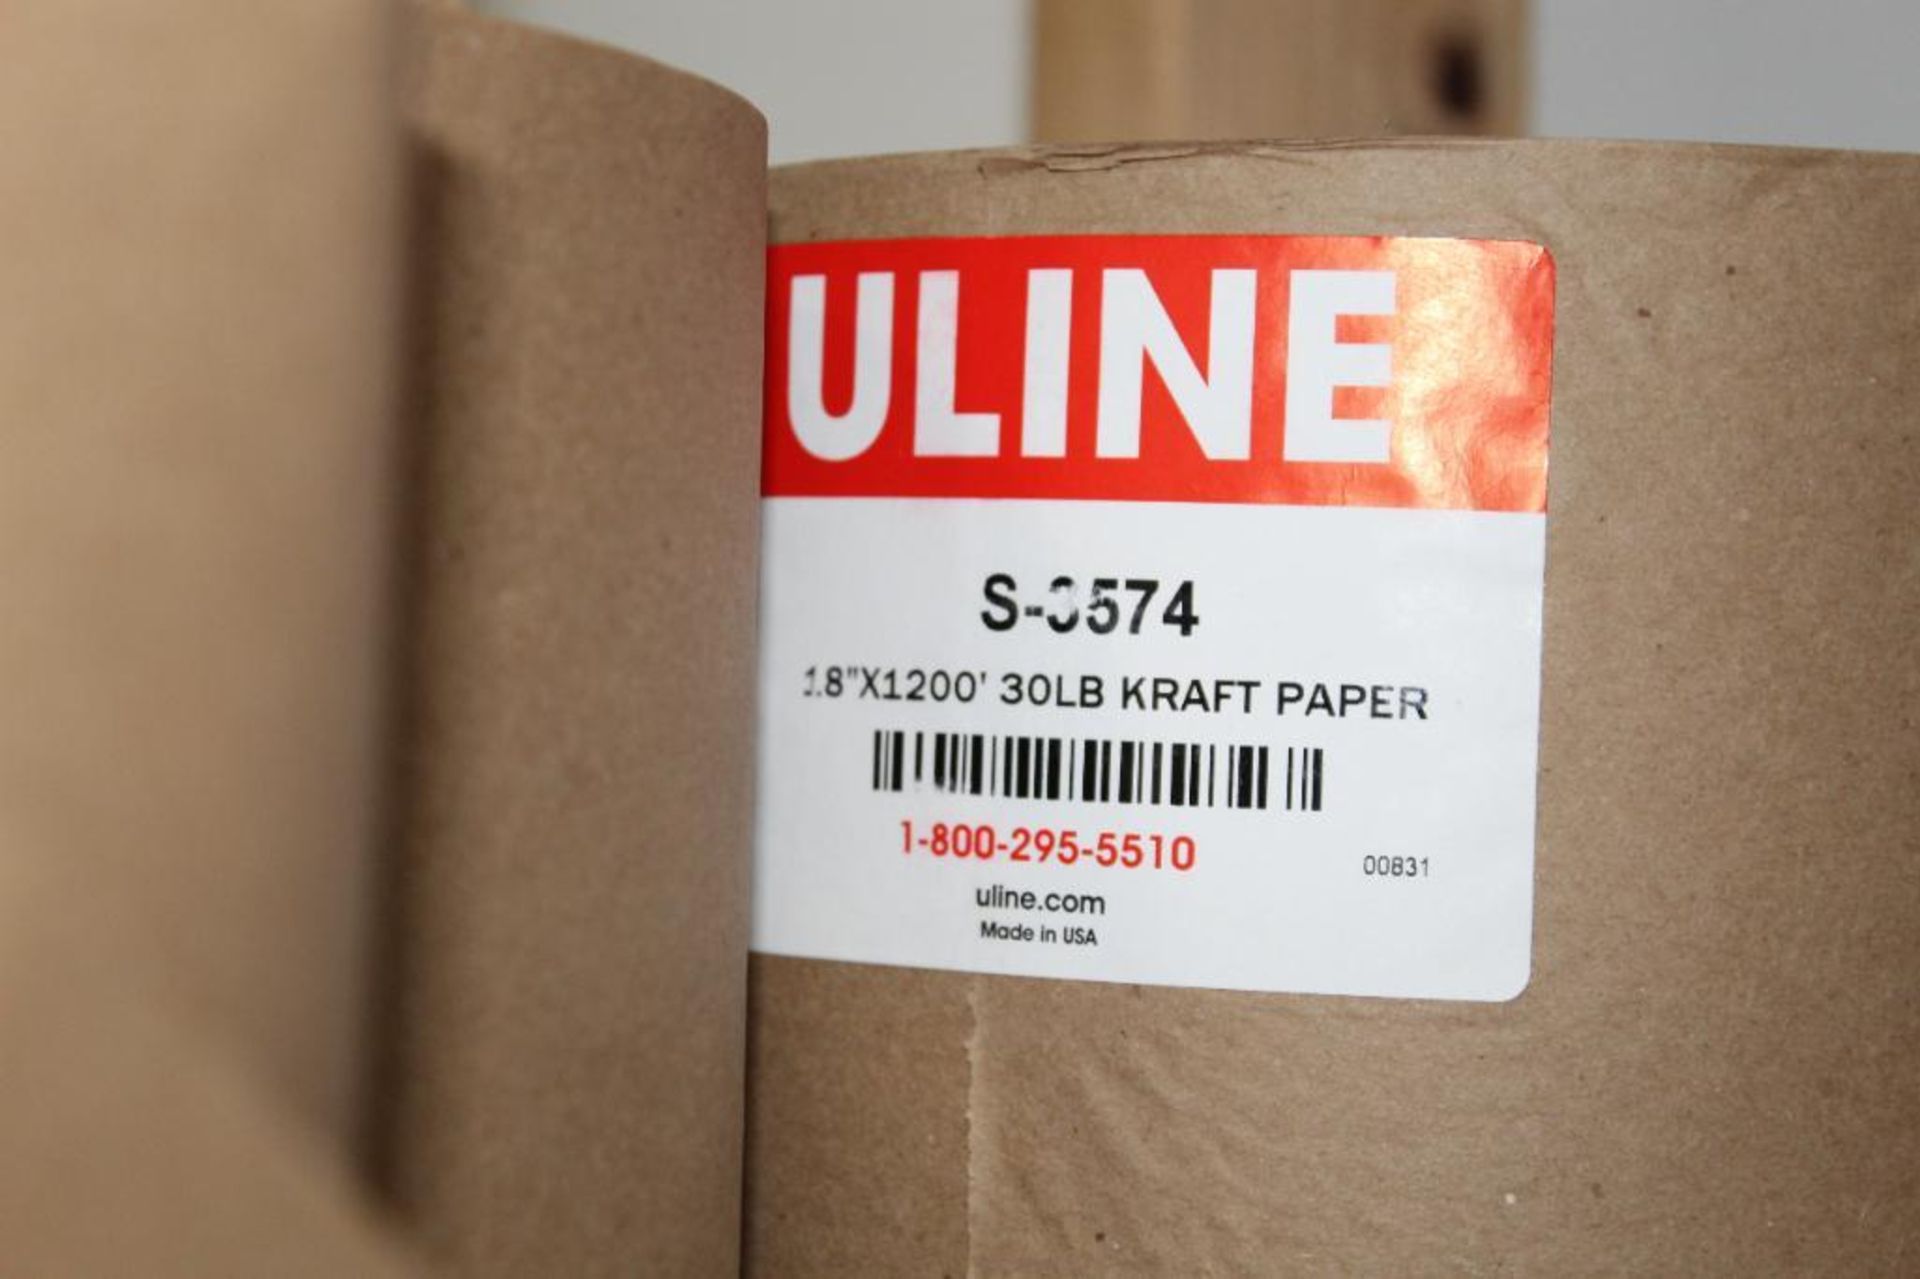 Rolls of Plastic & Uline 1/8" x 200' 30Lb Kraft Paper - Image 2 of 2